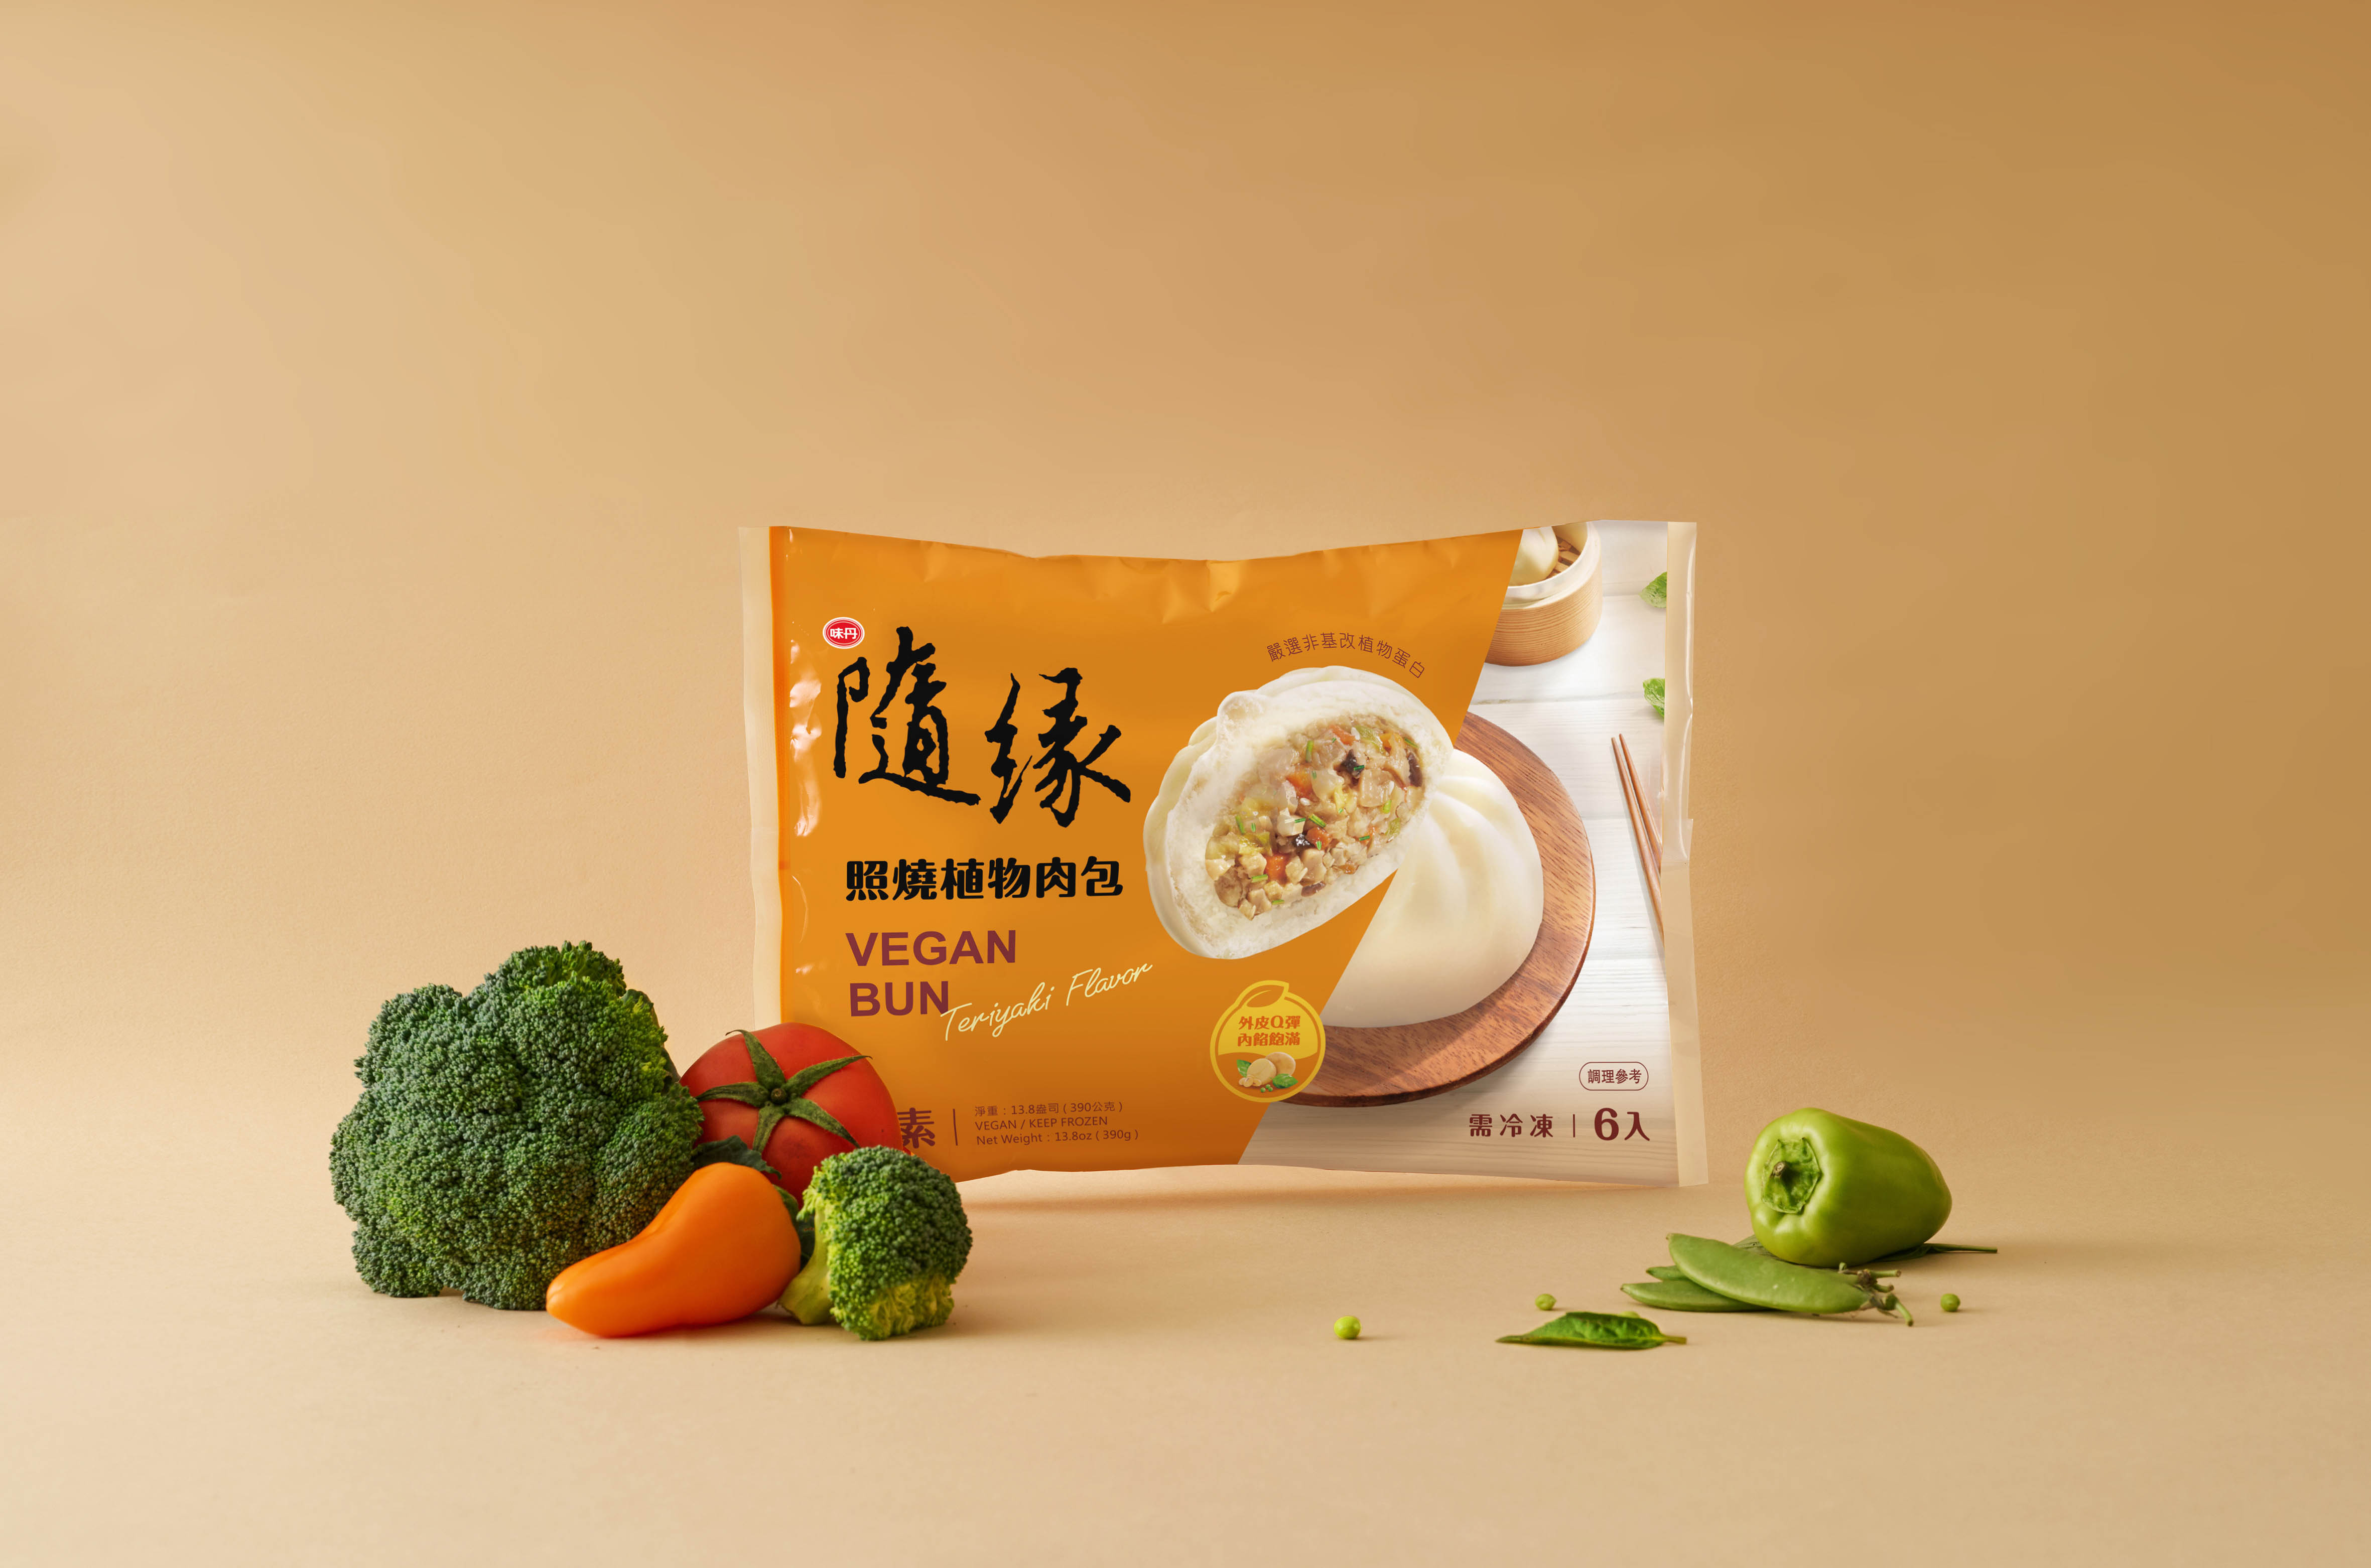 Vedan Suiyuan Vegan Bun Packaging by Onebook Design Studio